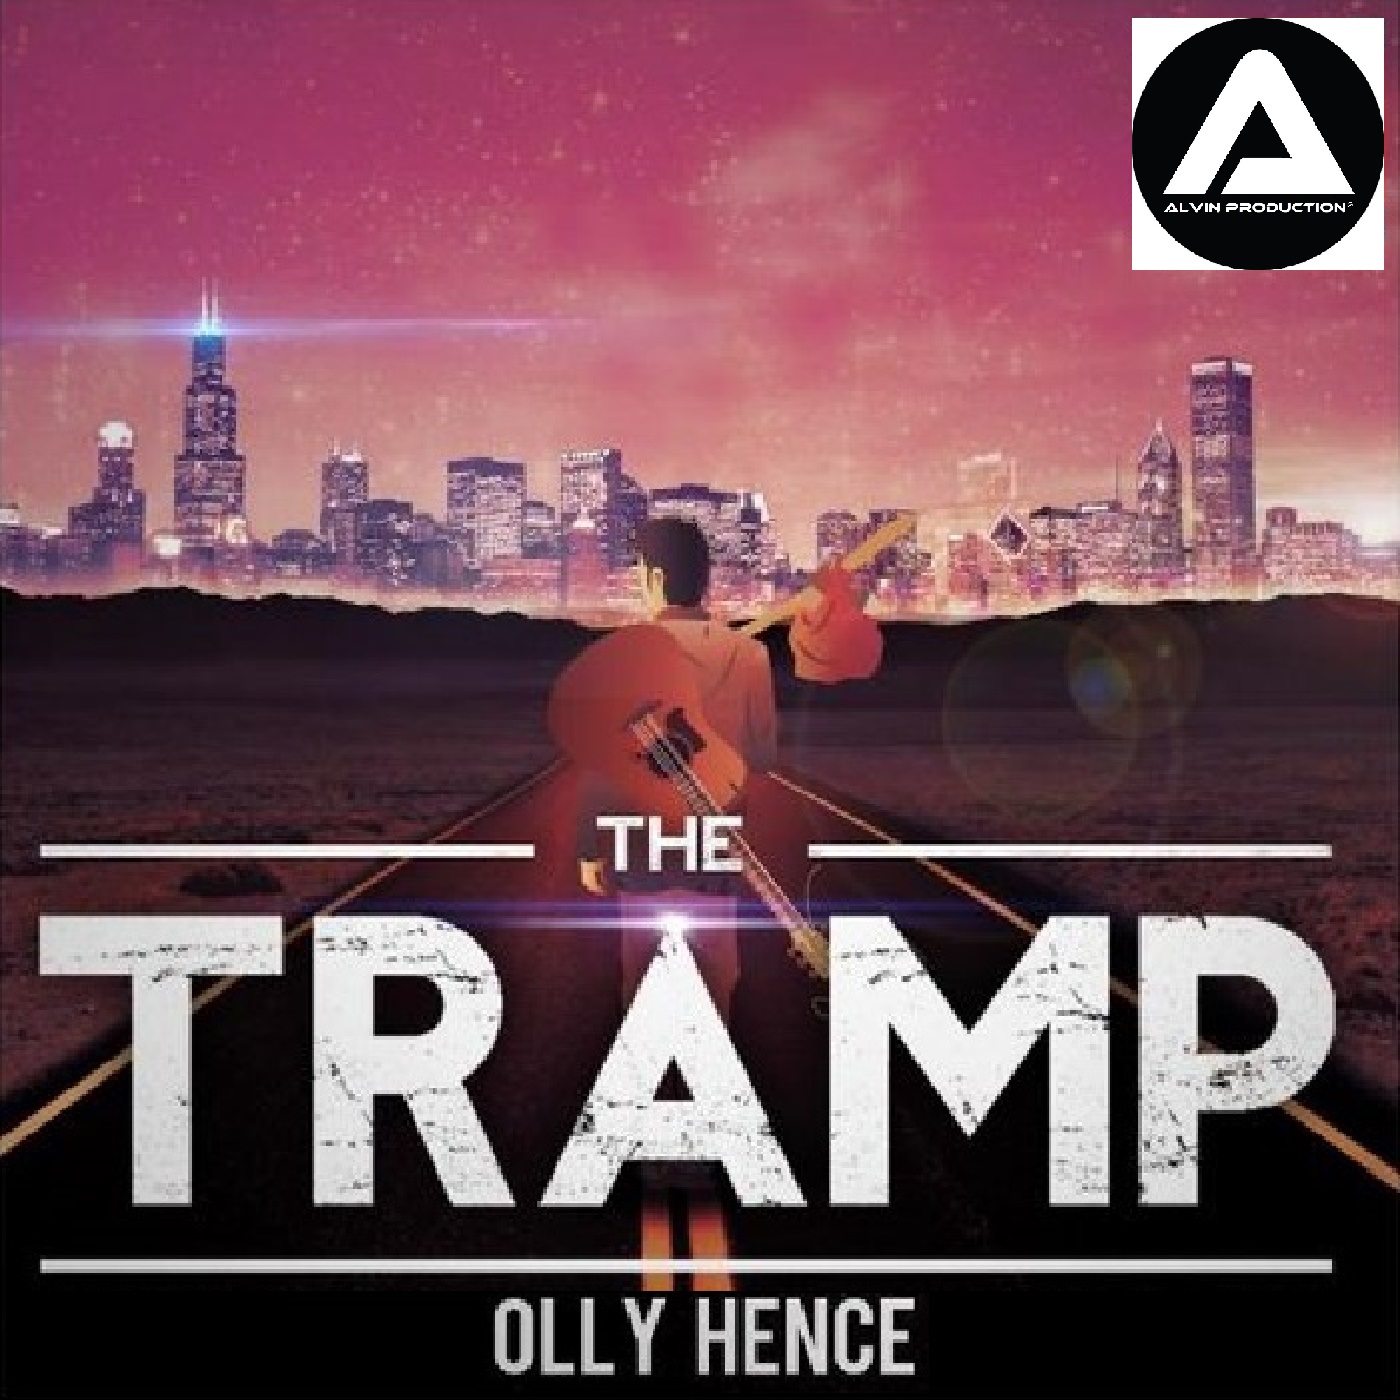 The Tramp - Remix